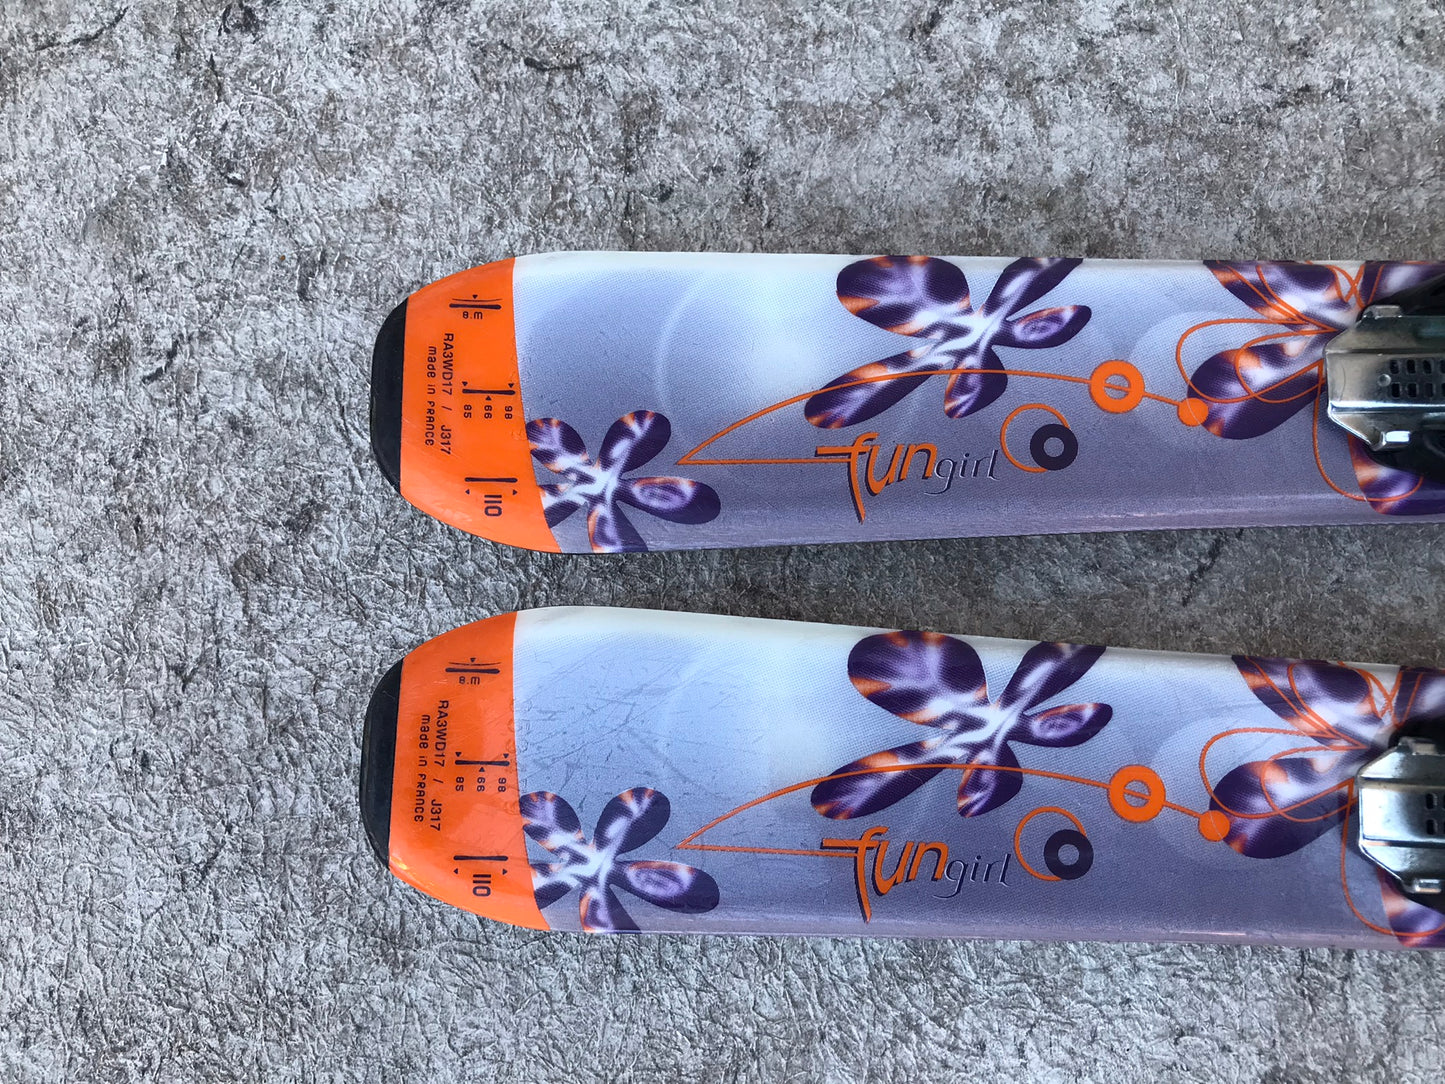 Ski 110 Rossignol Fun Girl Puple Grey Orange Parabolic With Bindings Excellent